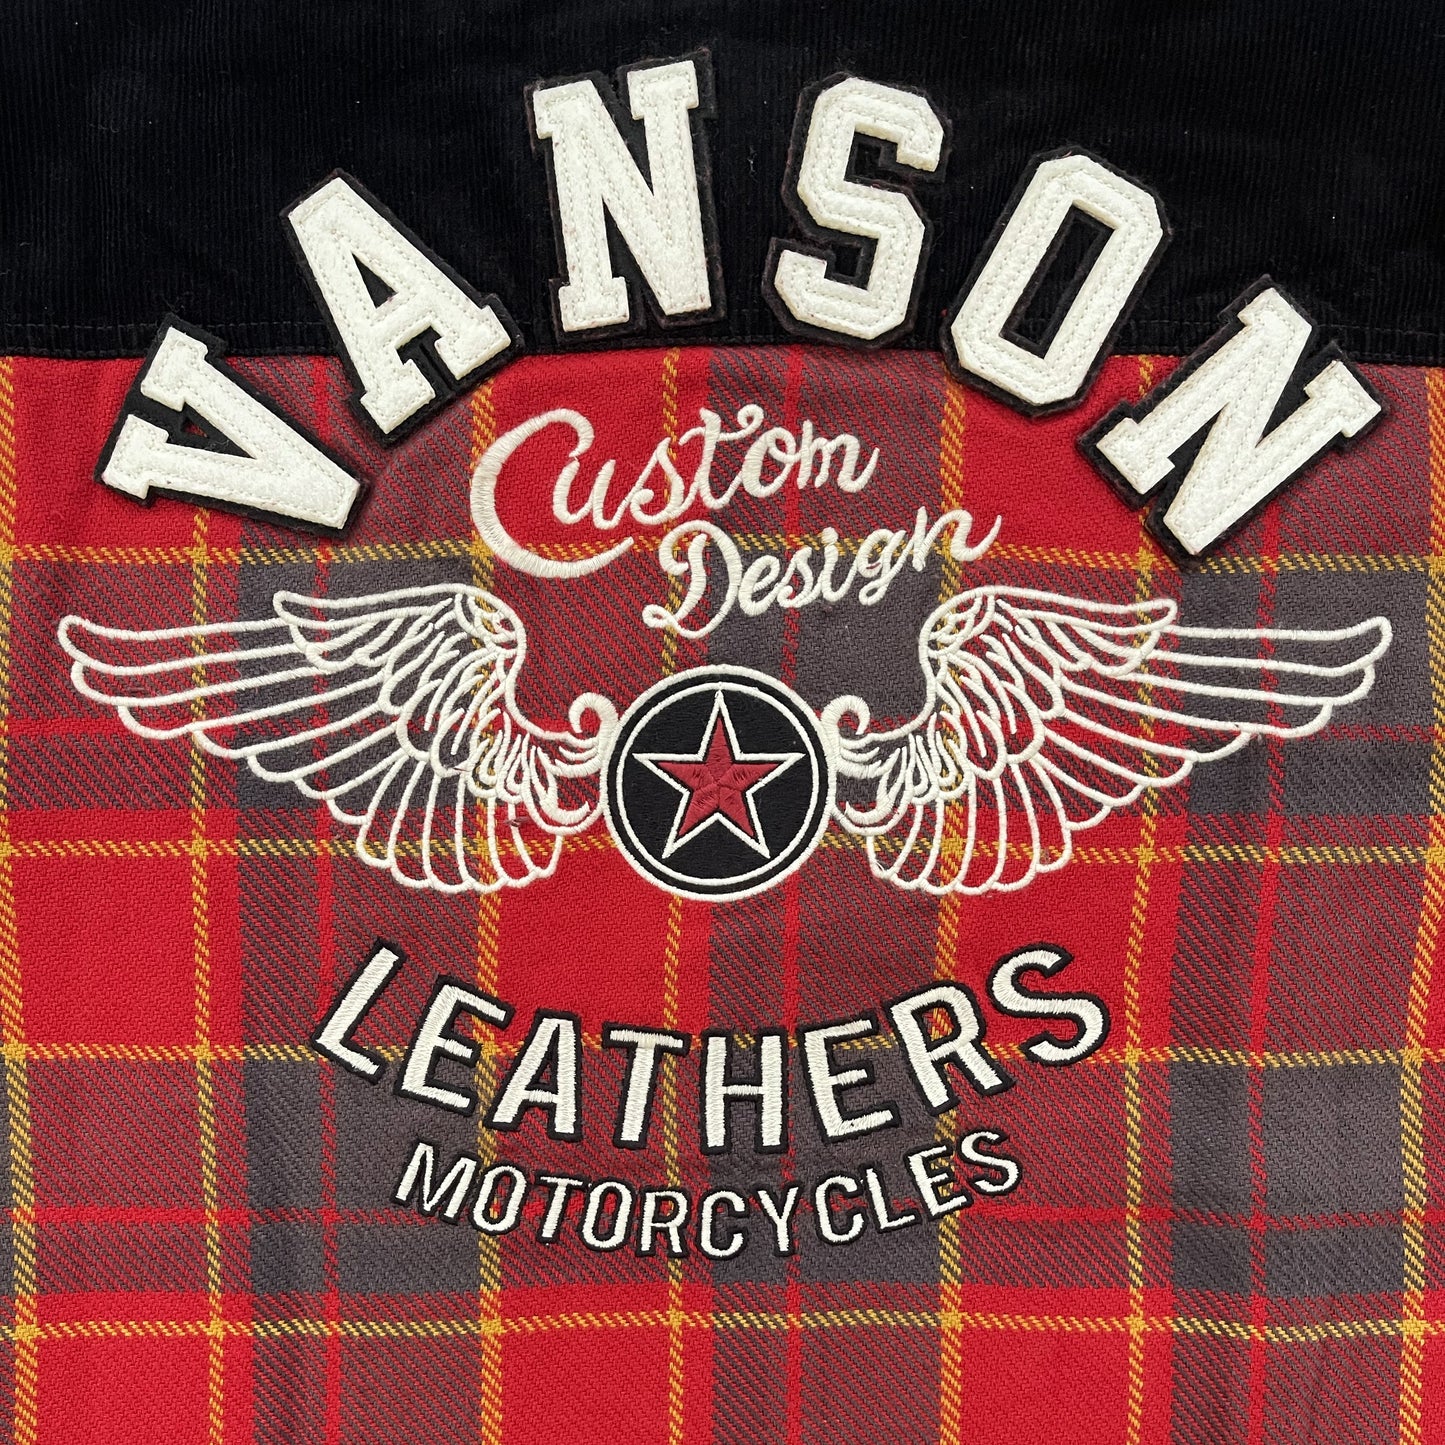 Vanson Leathers Plaid Check Shirt Jacket